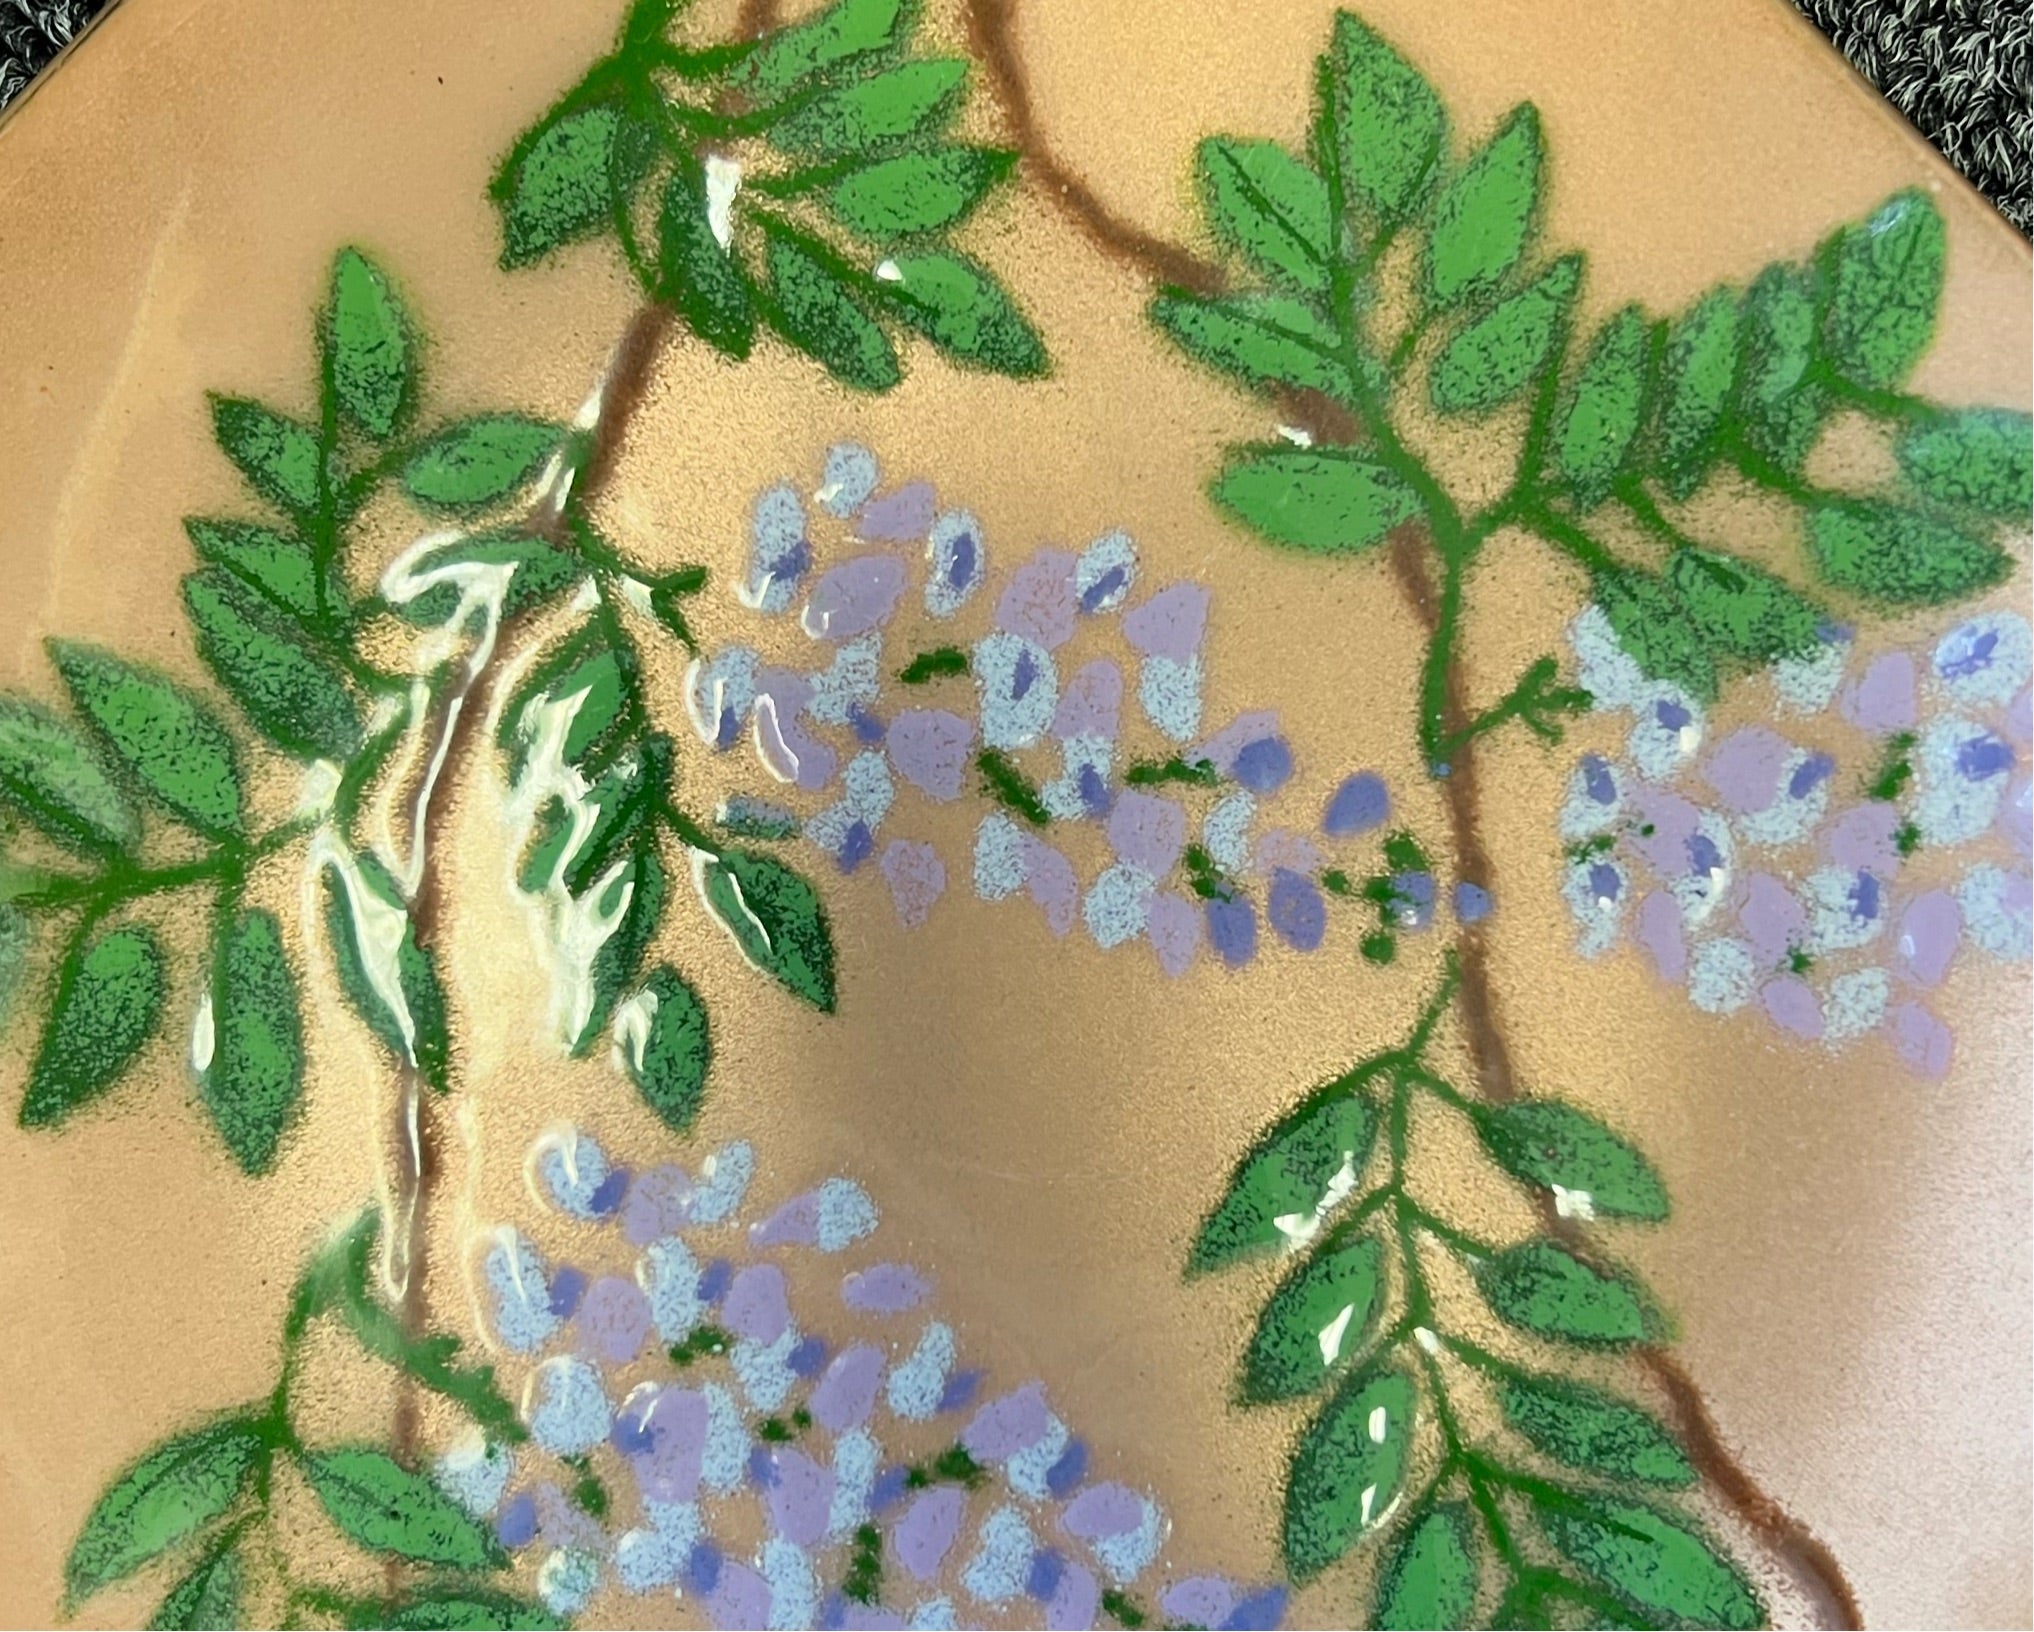 “Annemarie Davidson” Copper Floral Enamel Plate